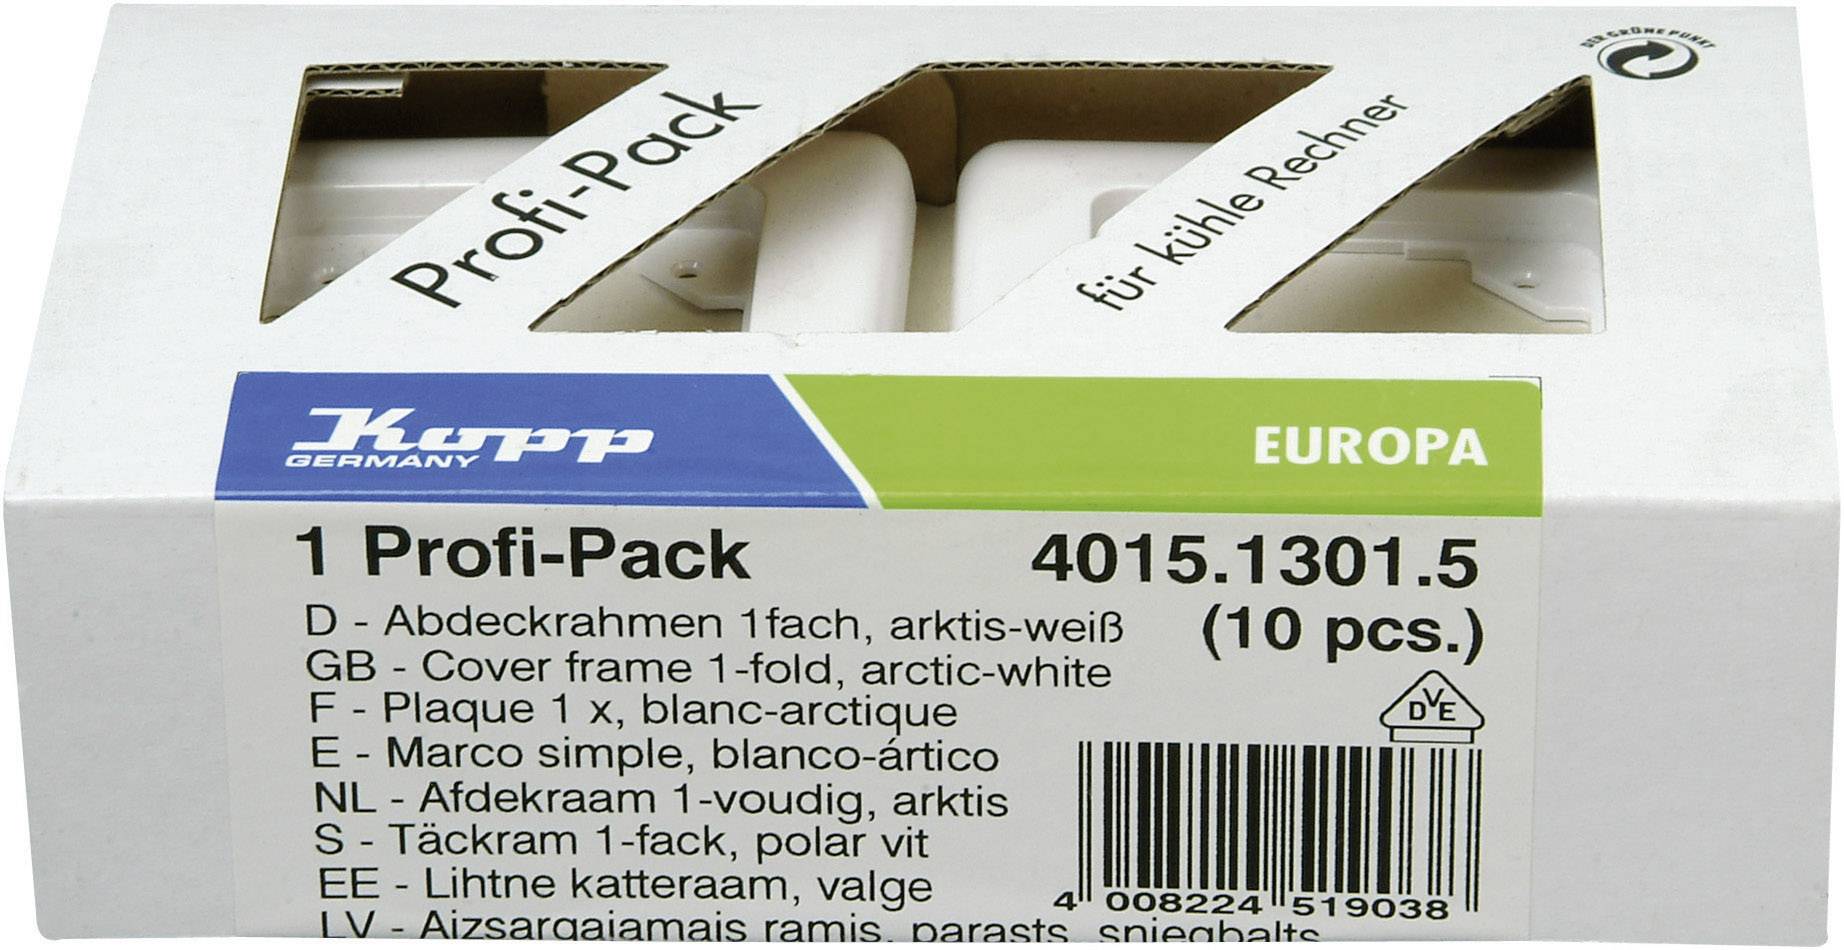 KOPP Abdeckrahmen 1-fach 401513015 Europa Pack:10 arktis